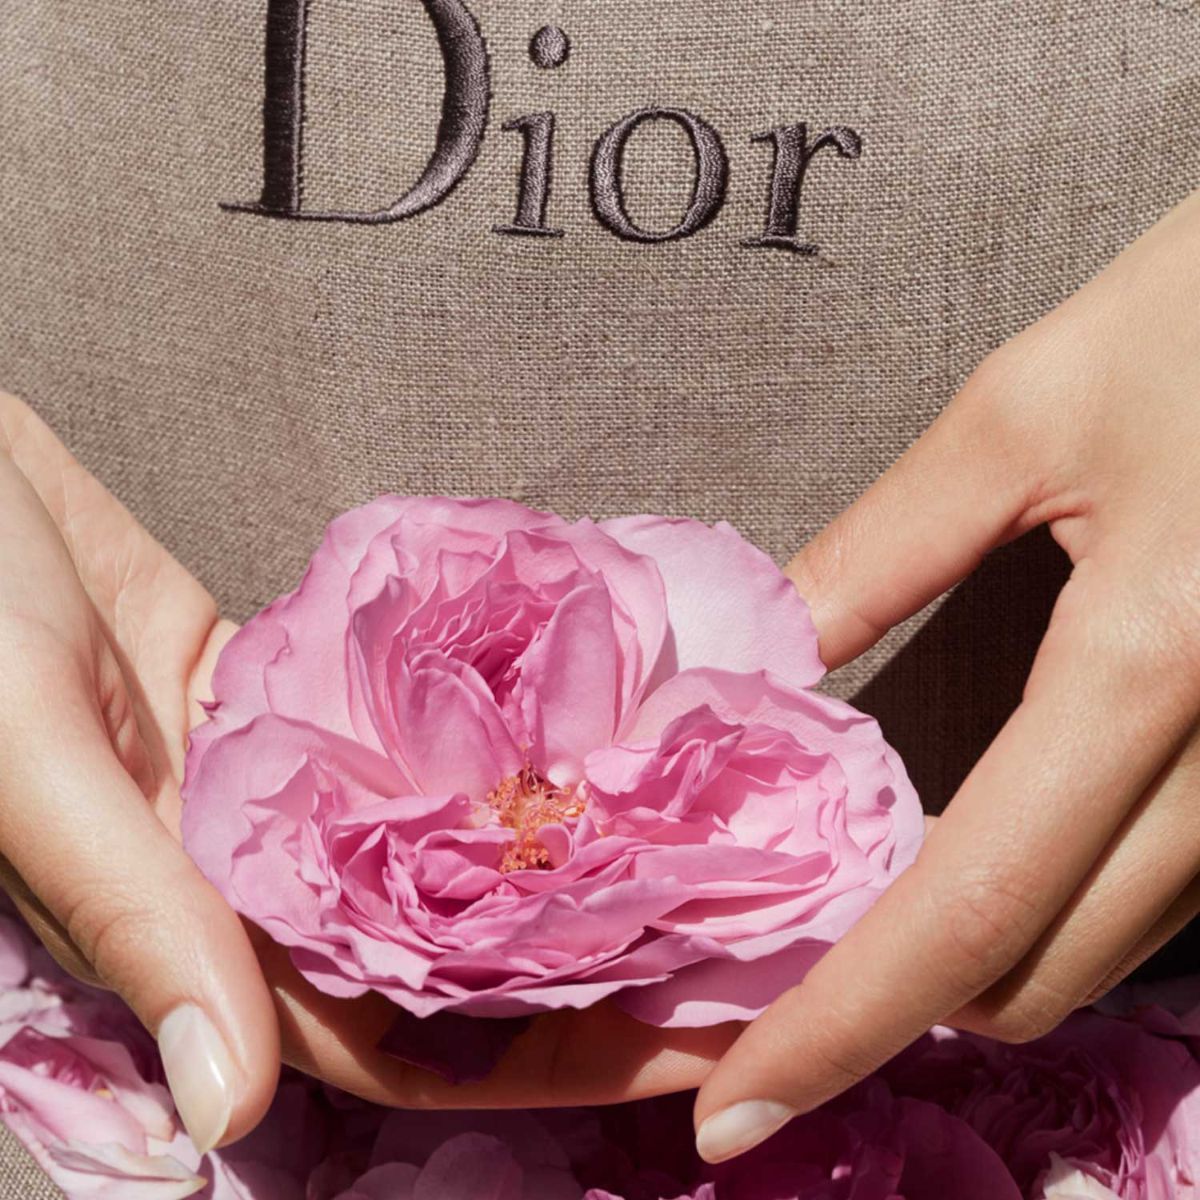 DIOR Miss Dior Rose N&#39; Roses Eau De Toilette